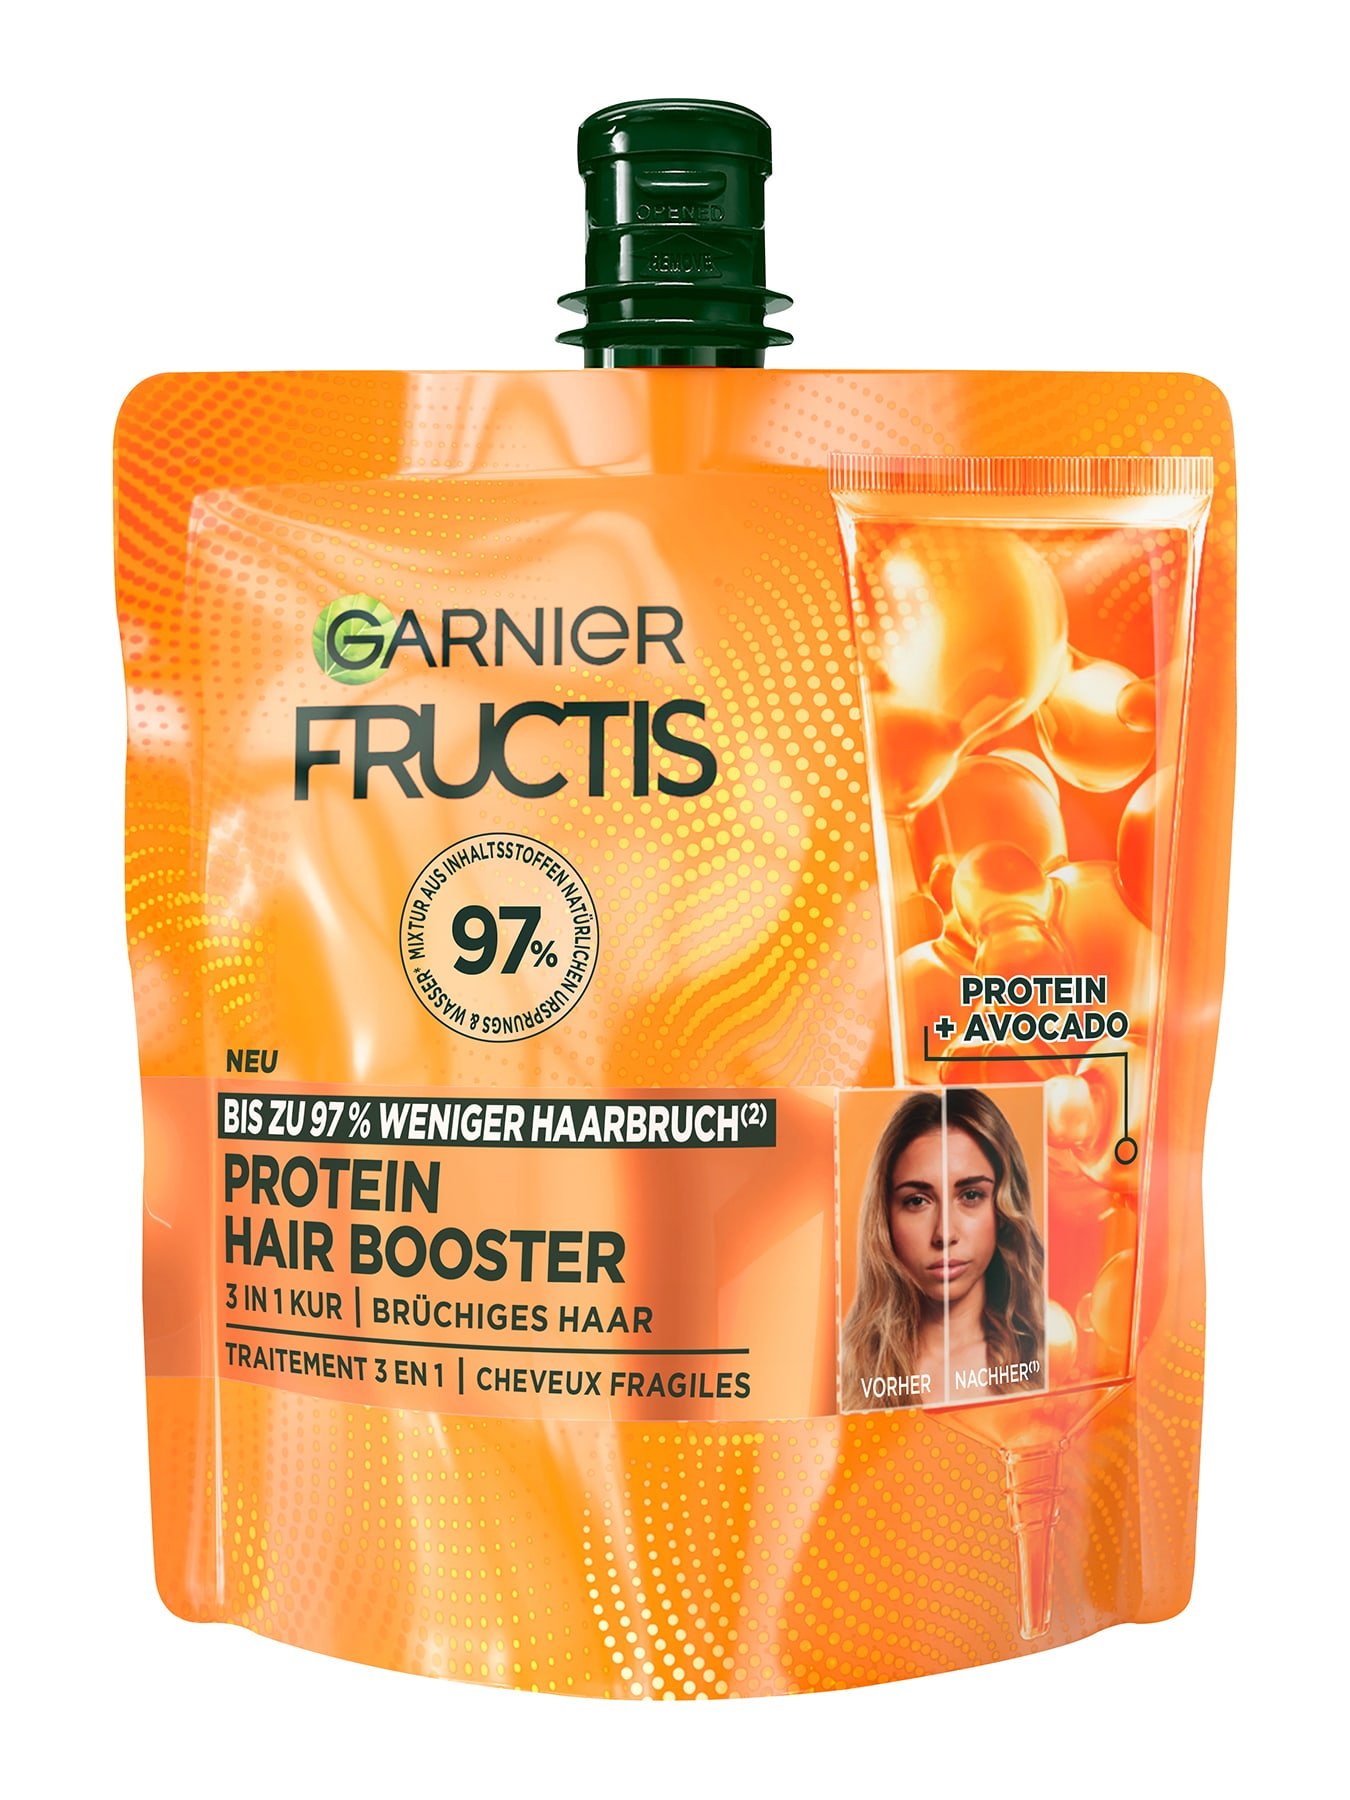 Garnier Fructis Hair Booster Prouktverpackung vorne